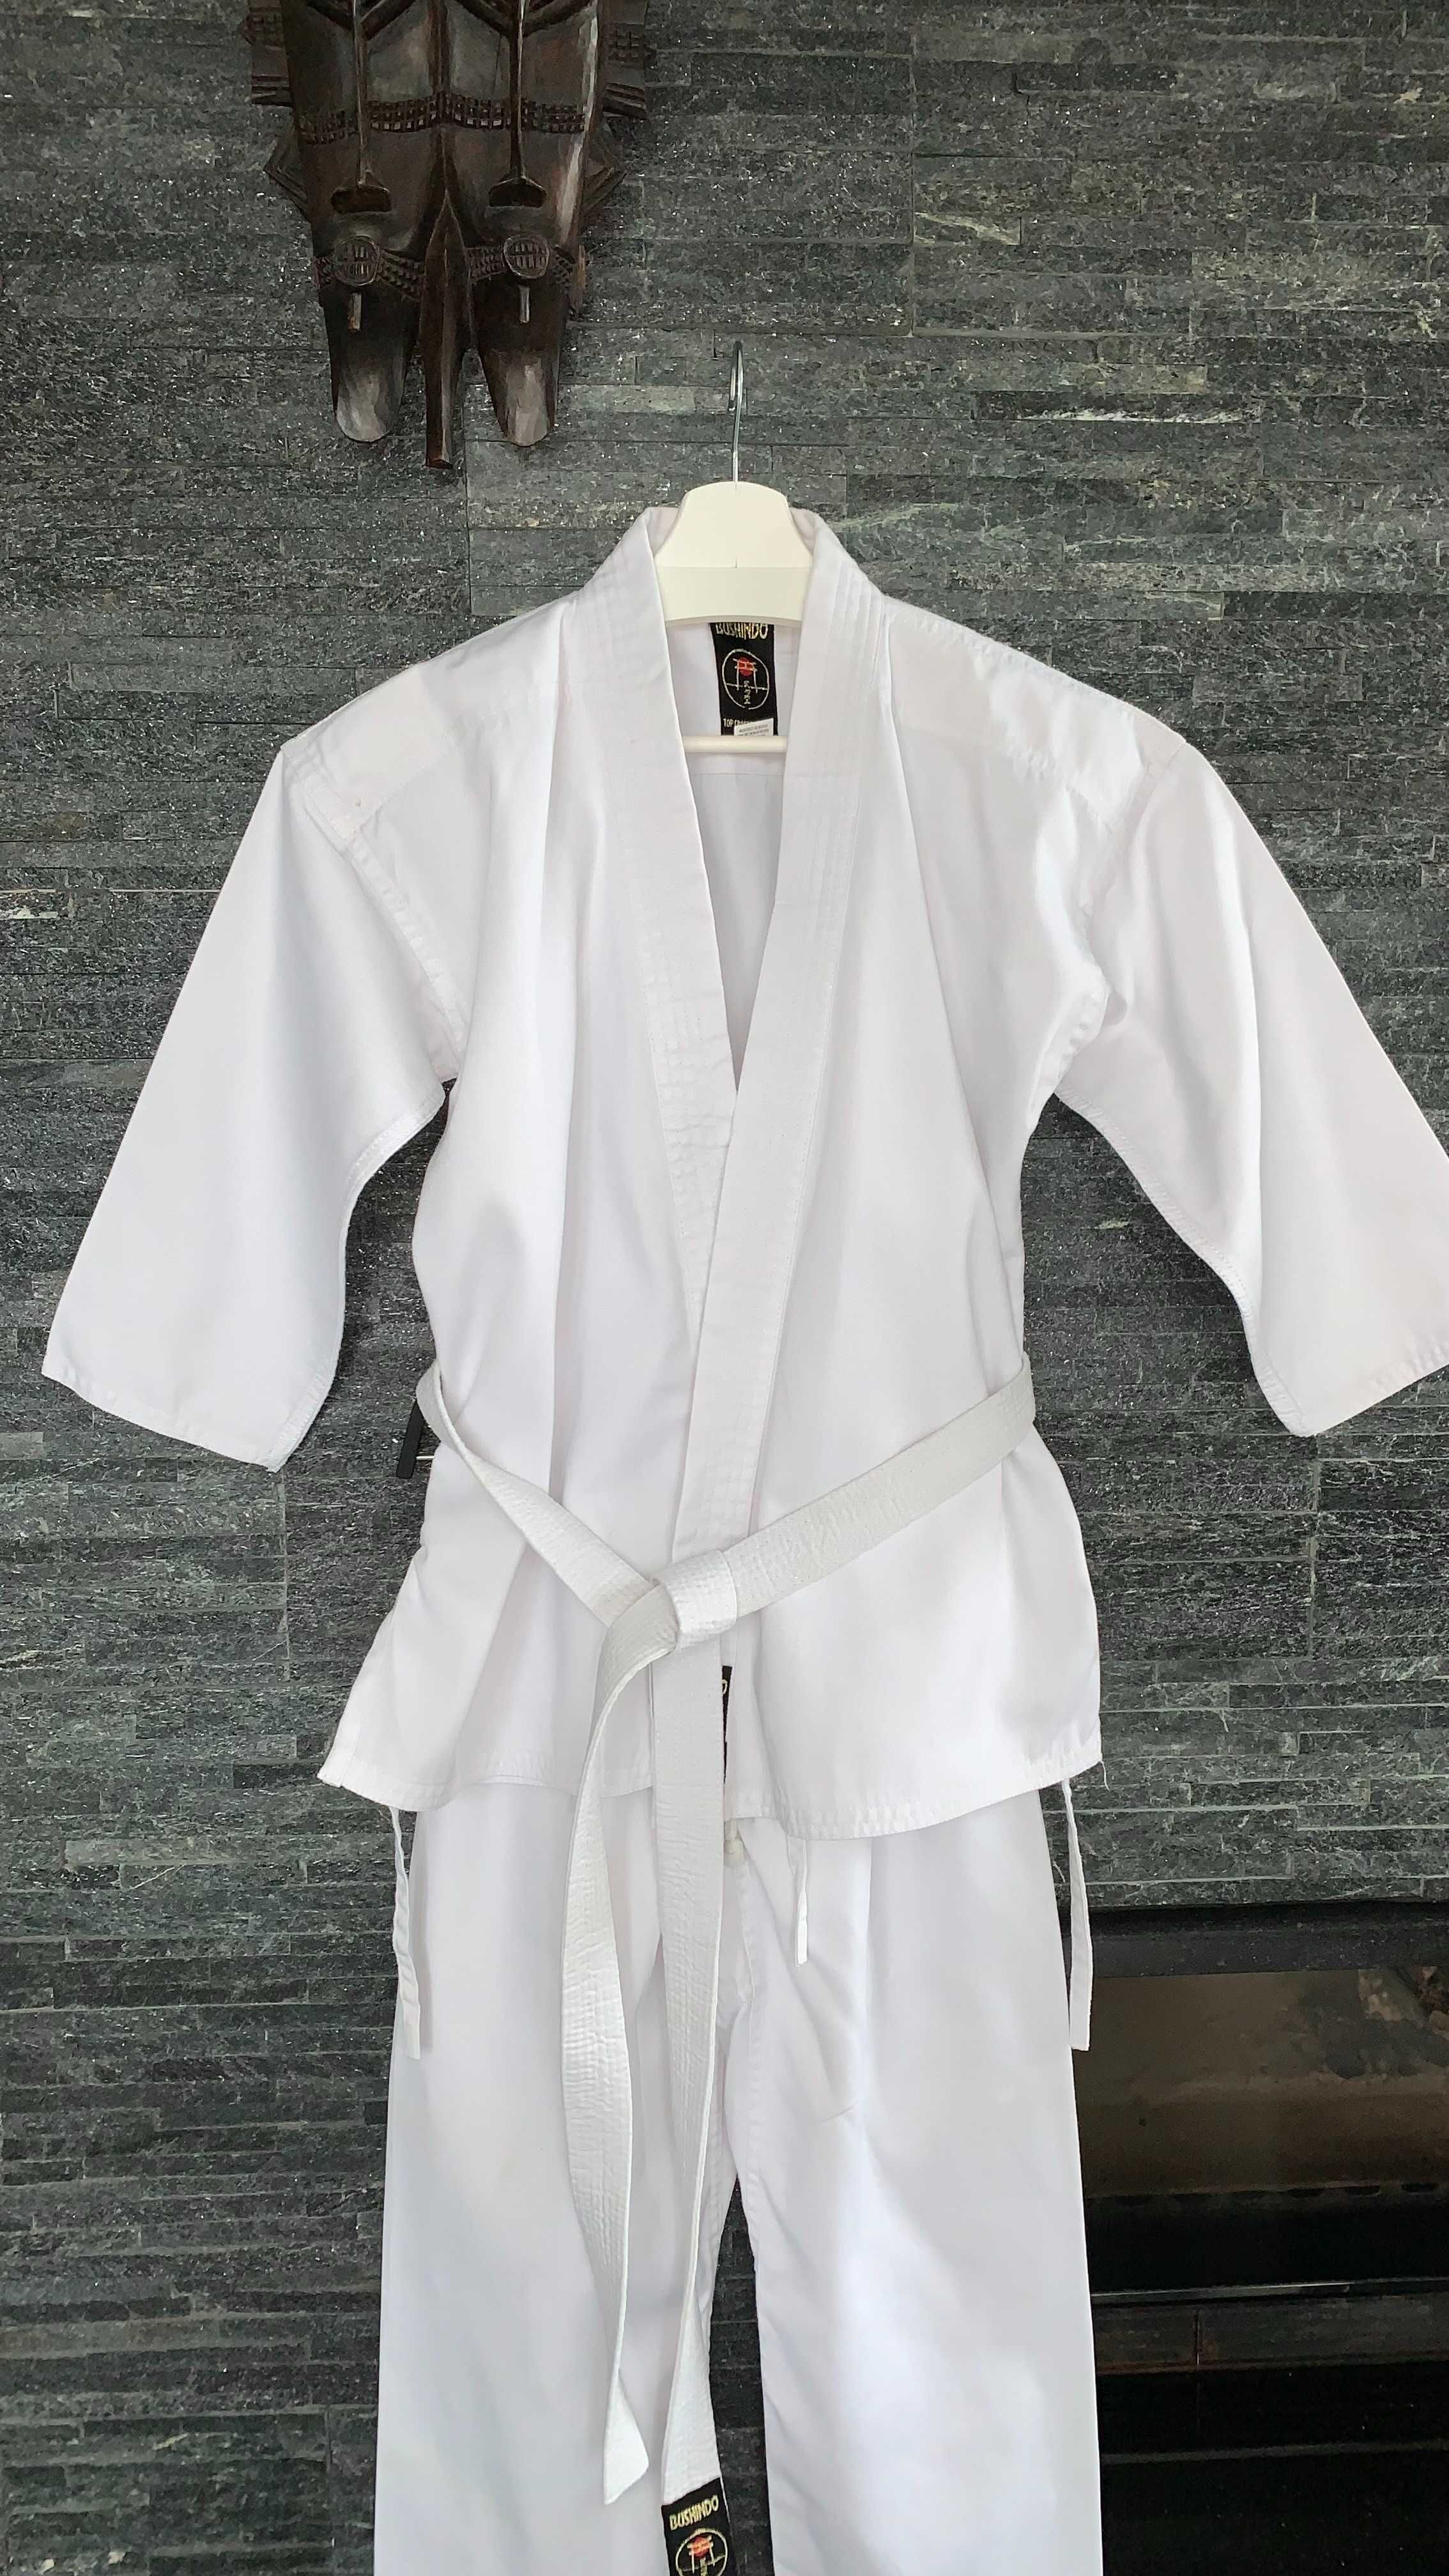 r. 130 cm / Bushindo kimono karate taekwondo komplet